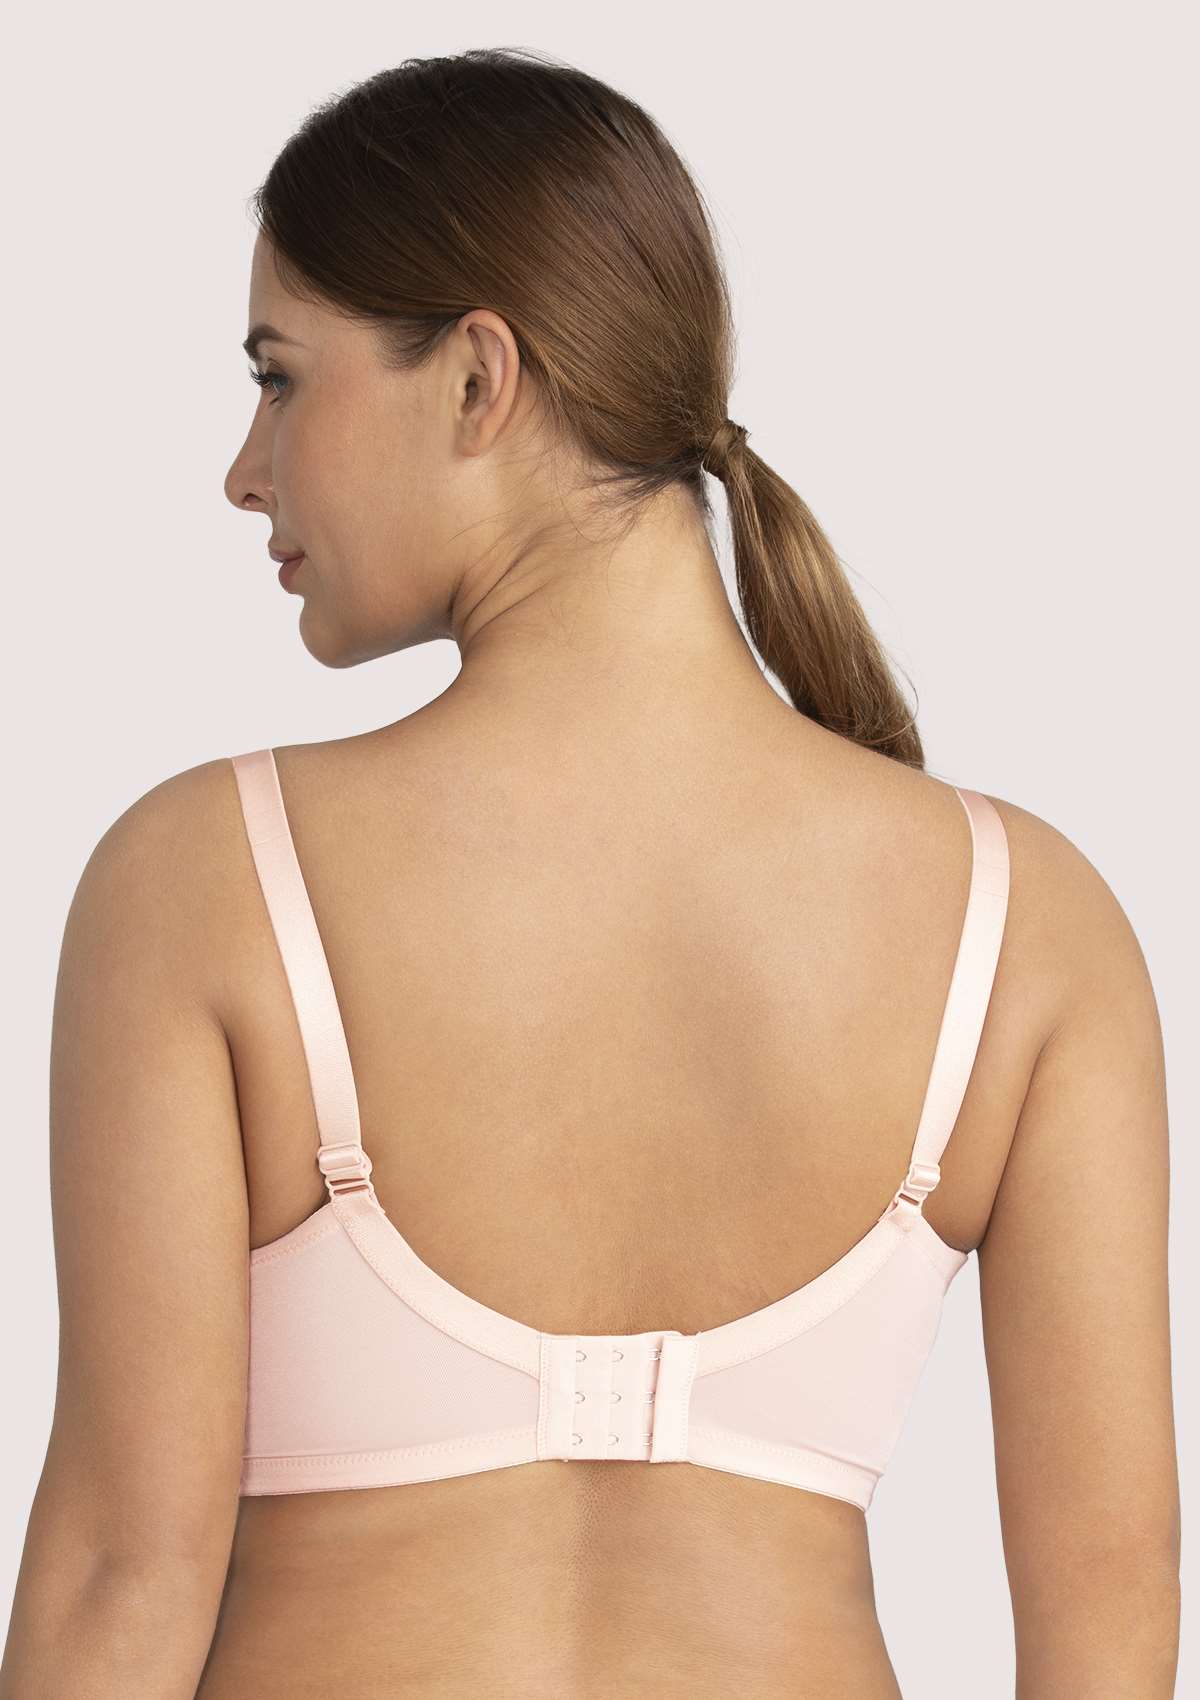 HSIA Sunflower Matching Bra And Panties Set: Comfortable Plus Size Bra - Pink / 38 / DD/E